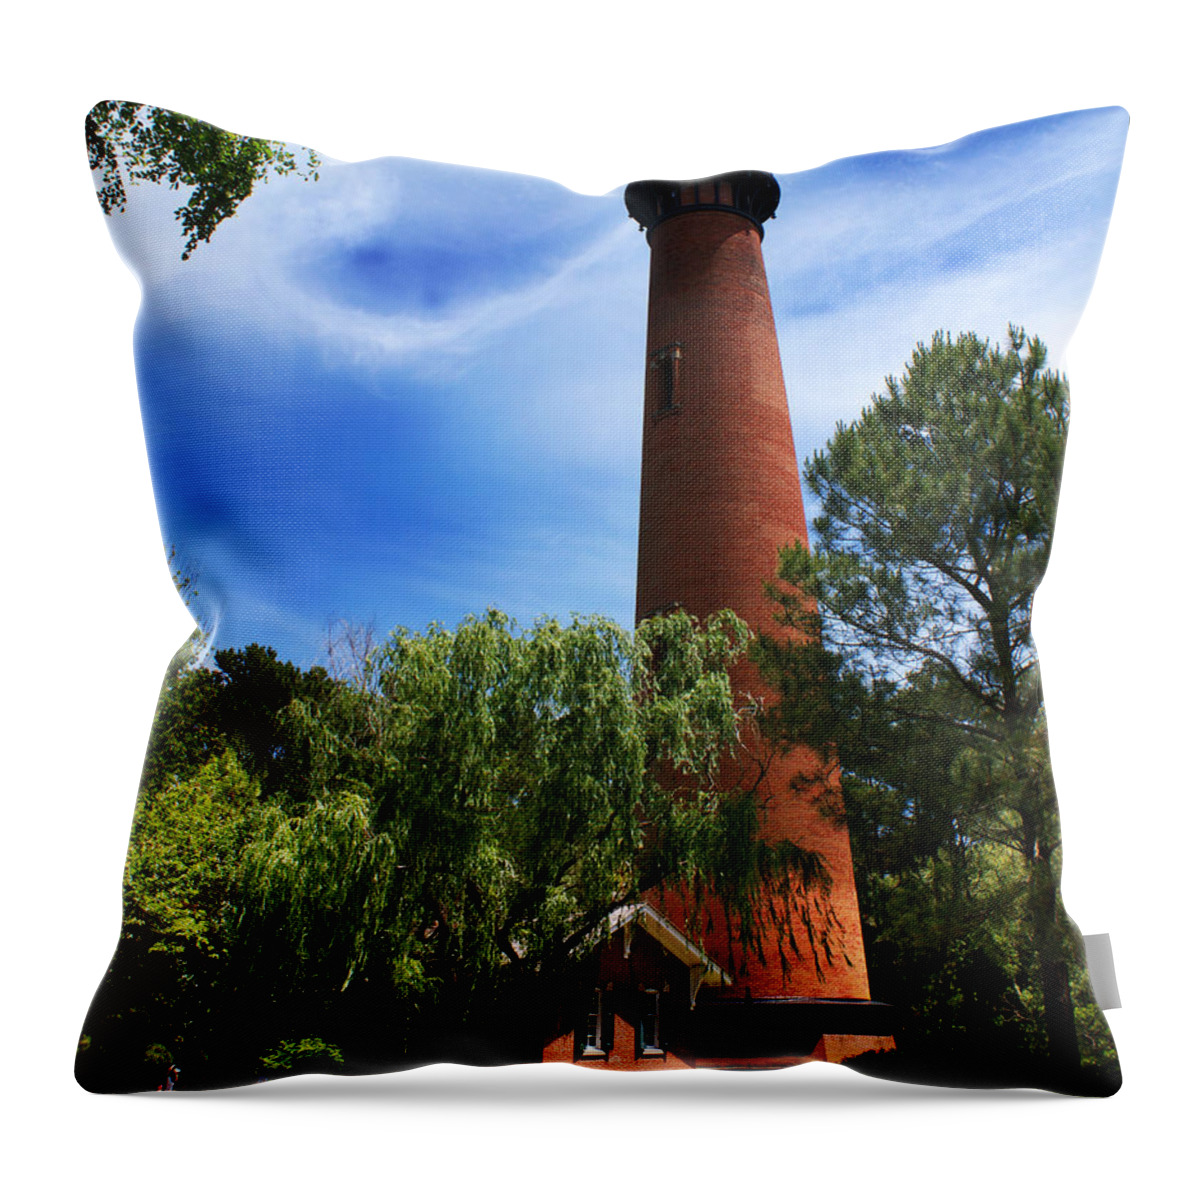 Currituck Beach Lighthouse Throw Pillow featuring the photograph Currituck Beach Lighthouse by Paul Mashburn